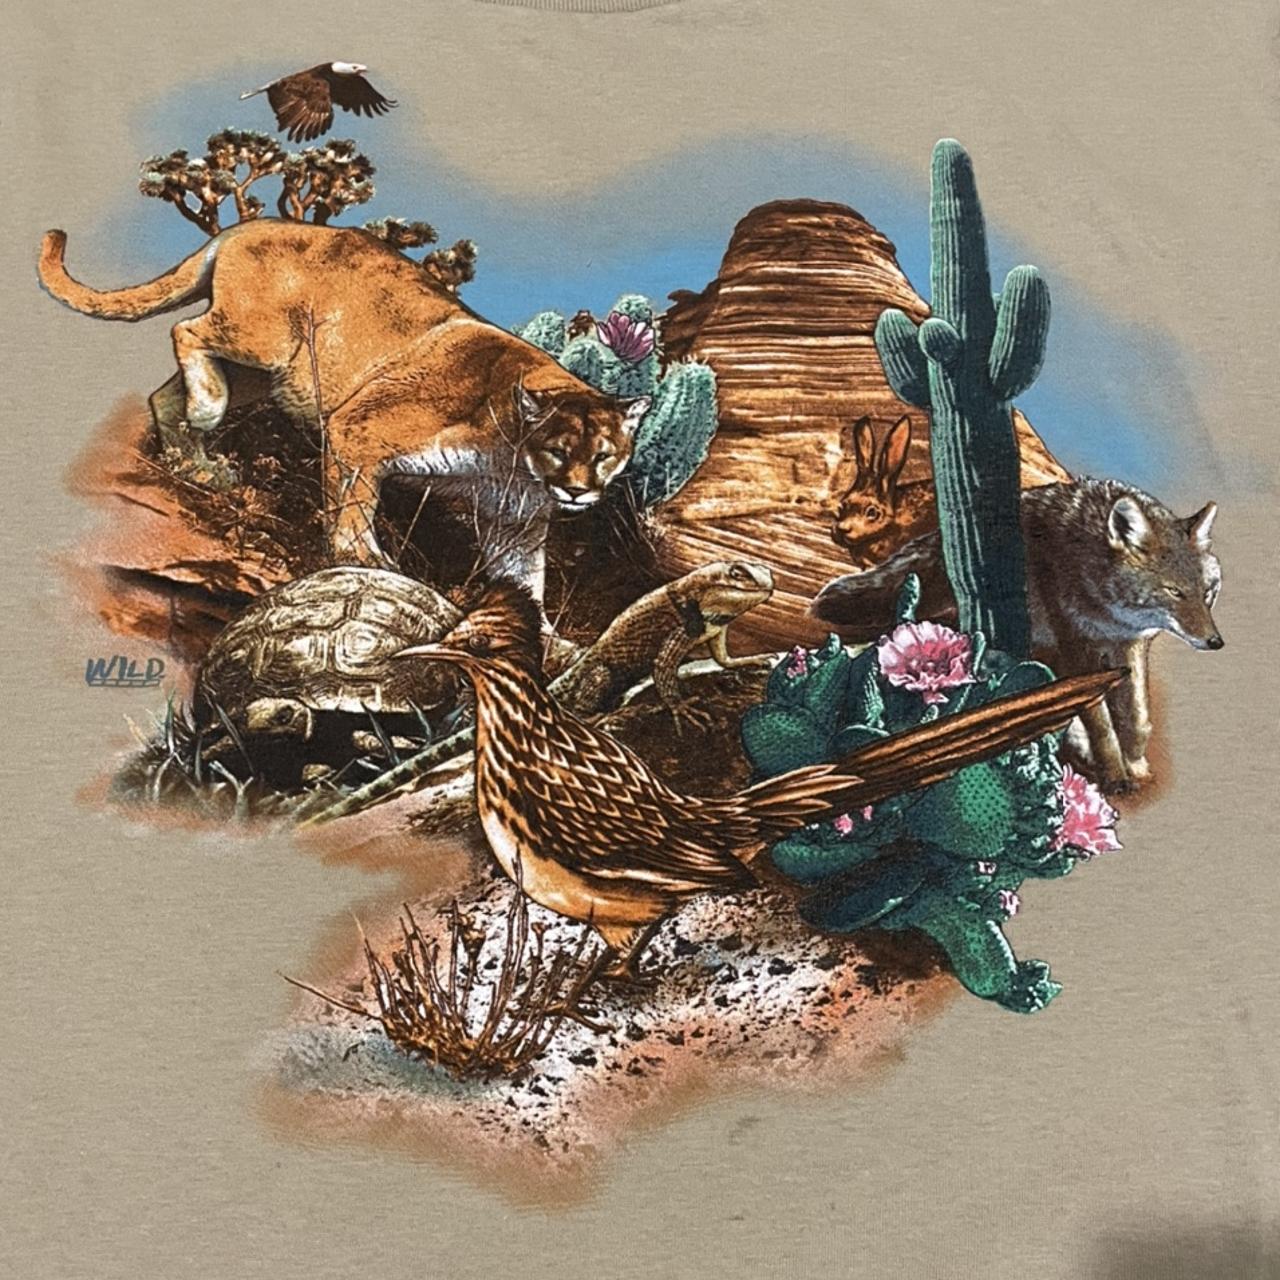 Wild Men's Tan and Brown T-shirt (3)